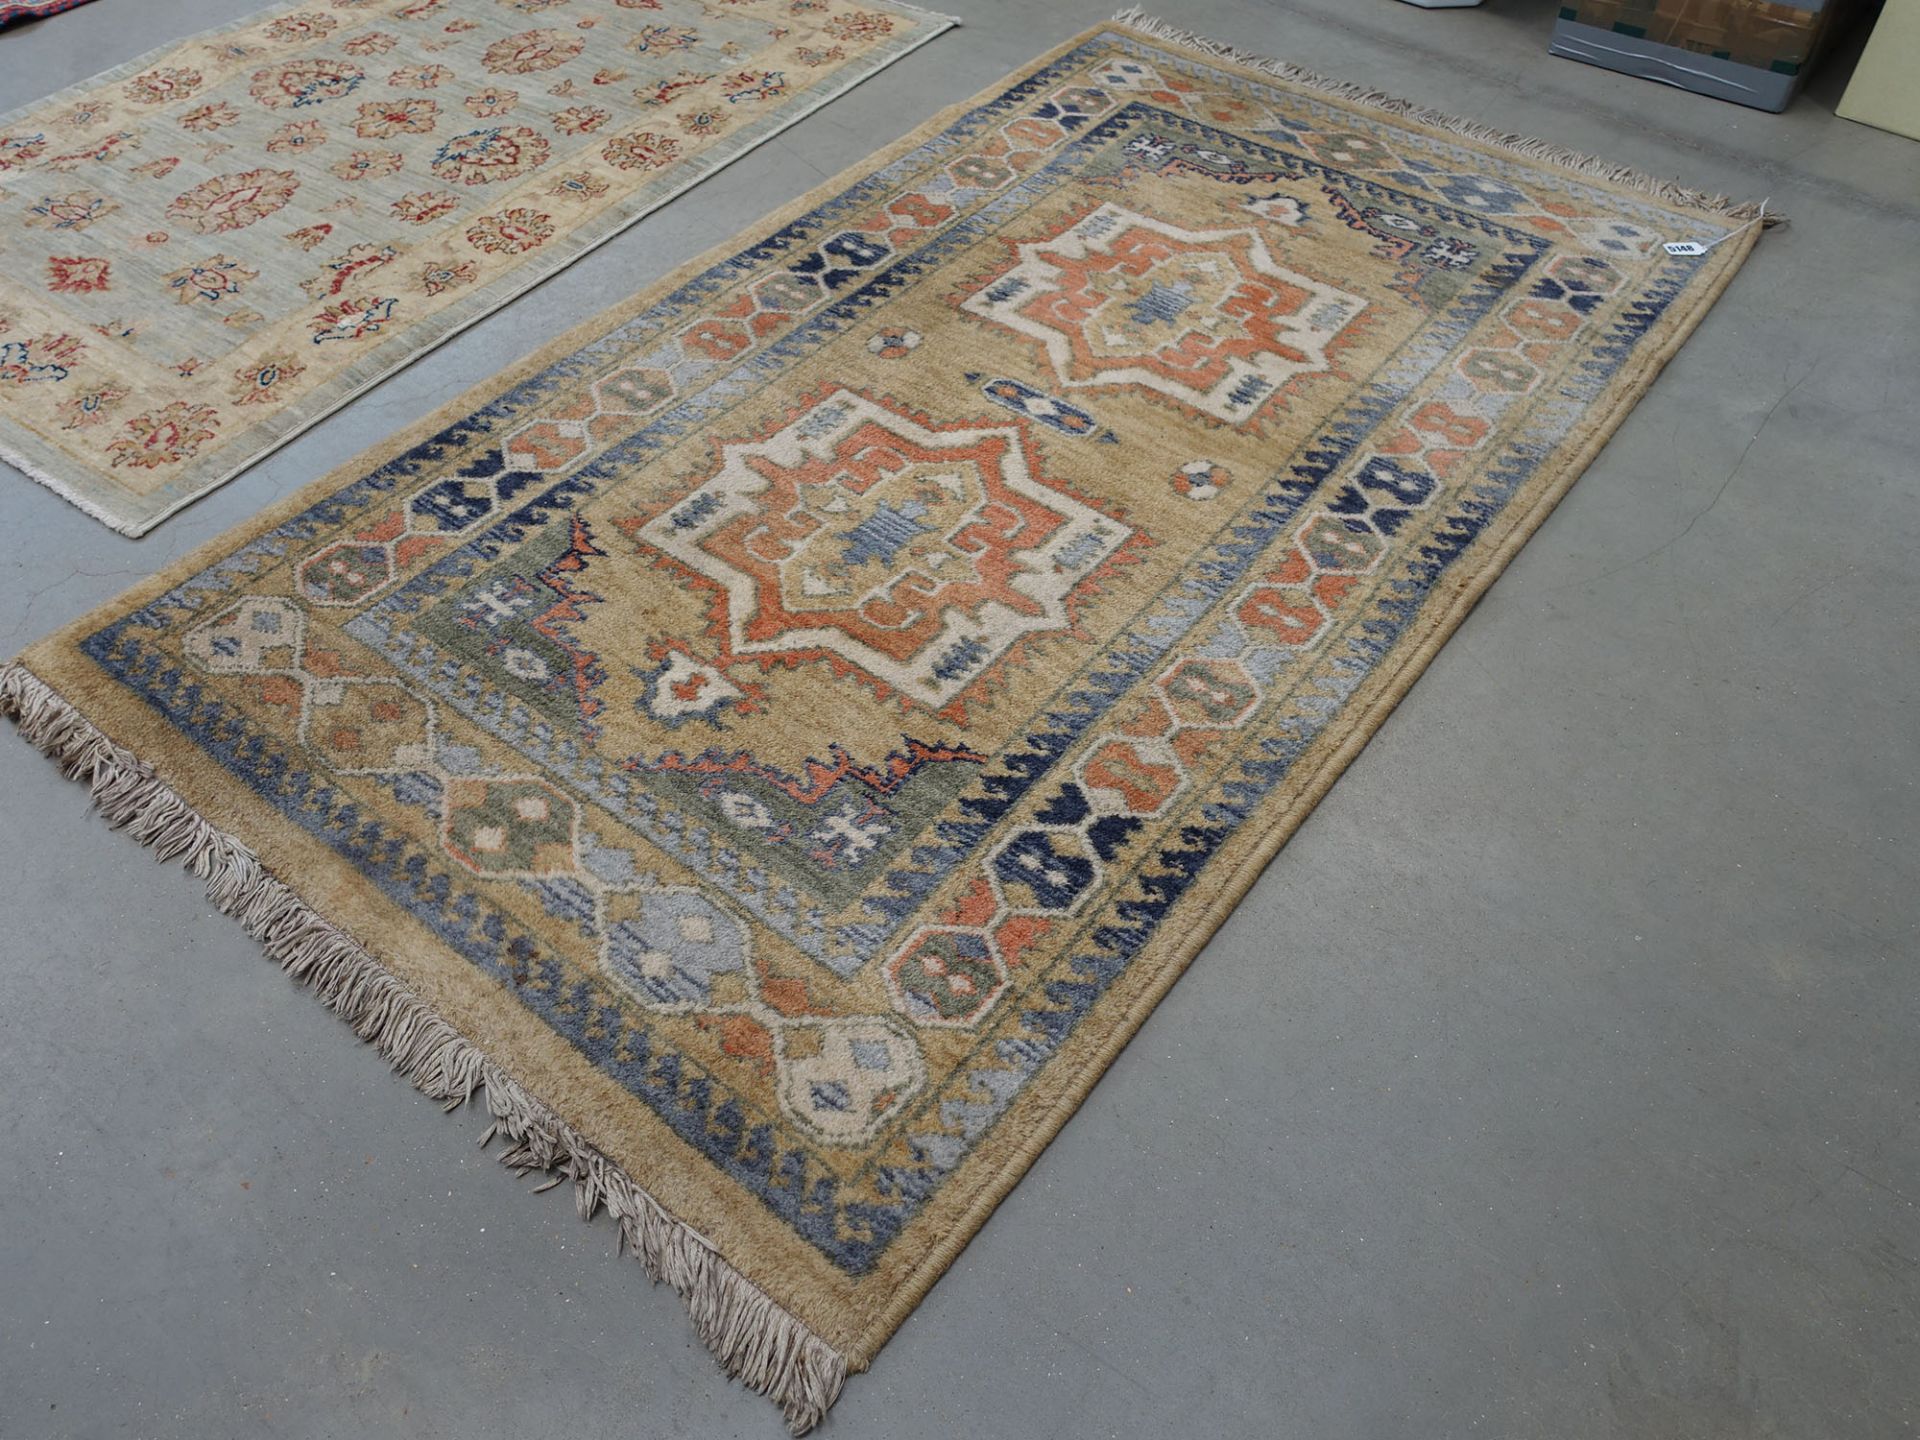 4 Indian floral patterned mats